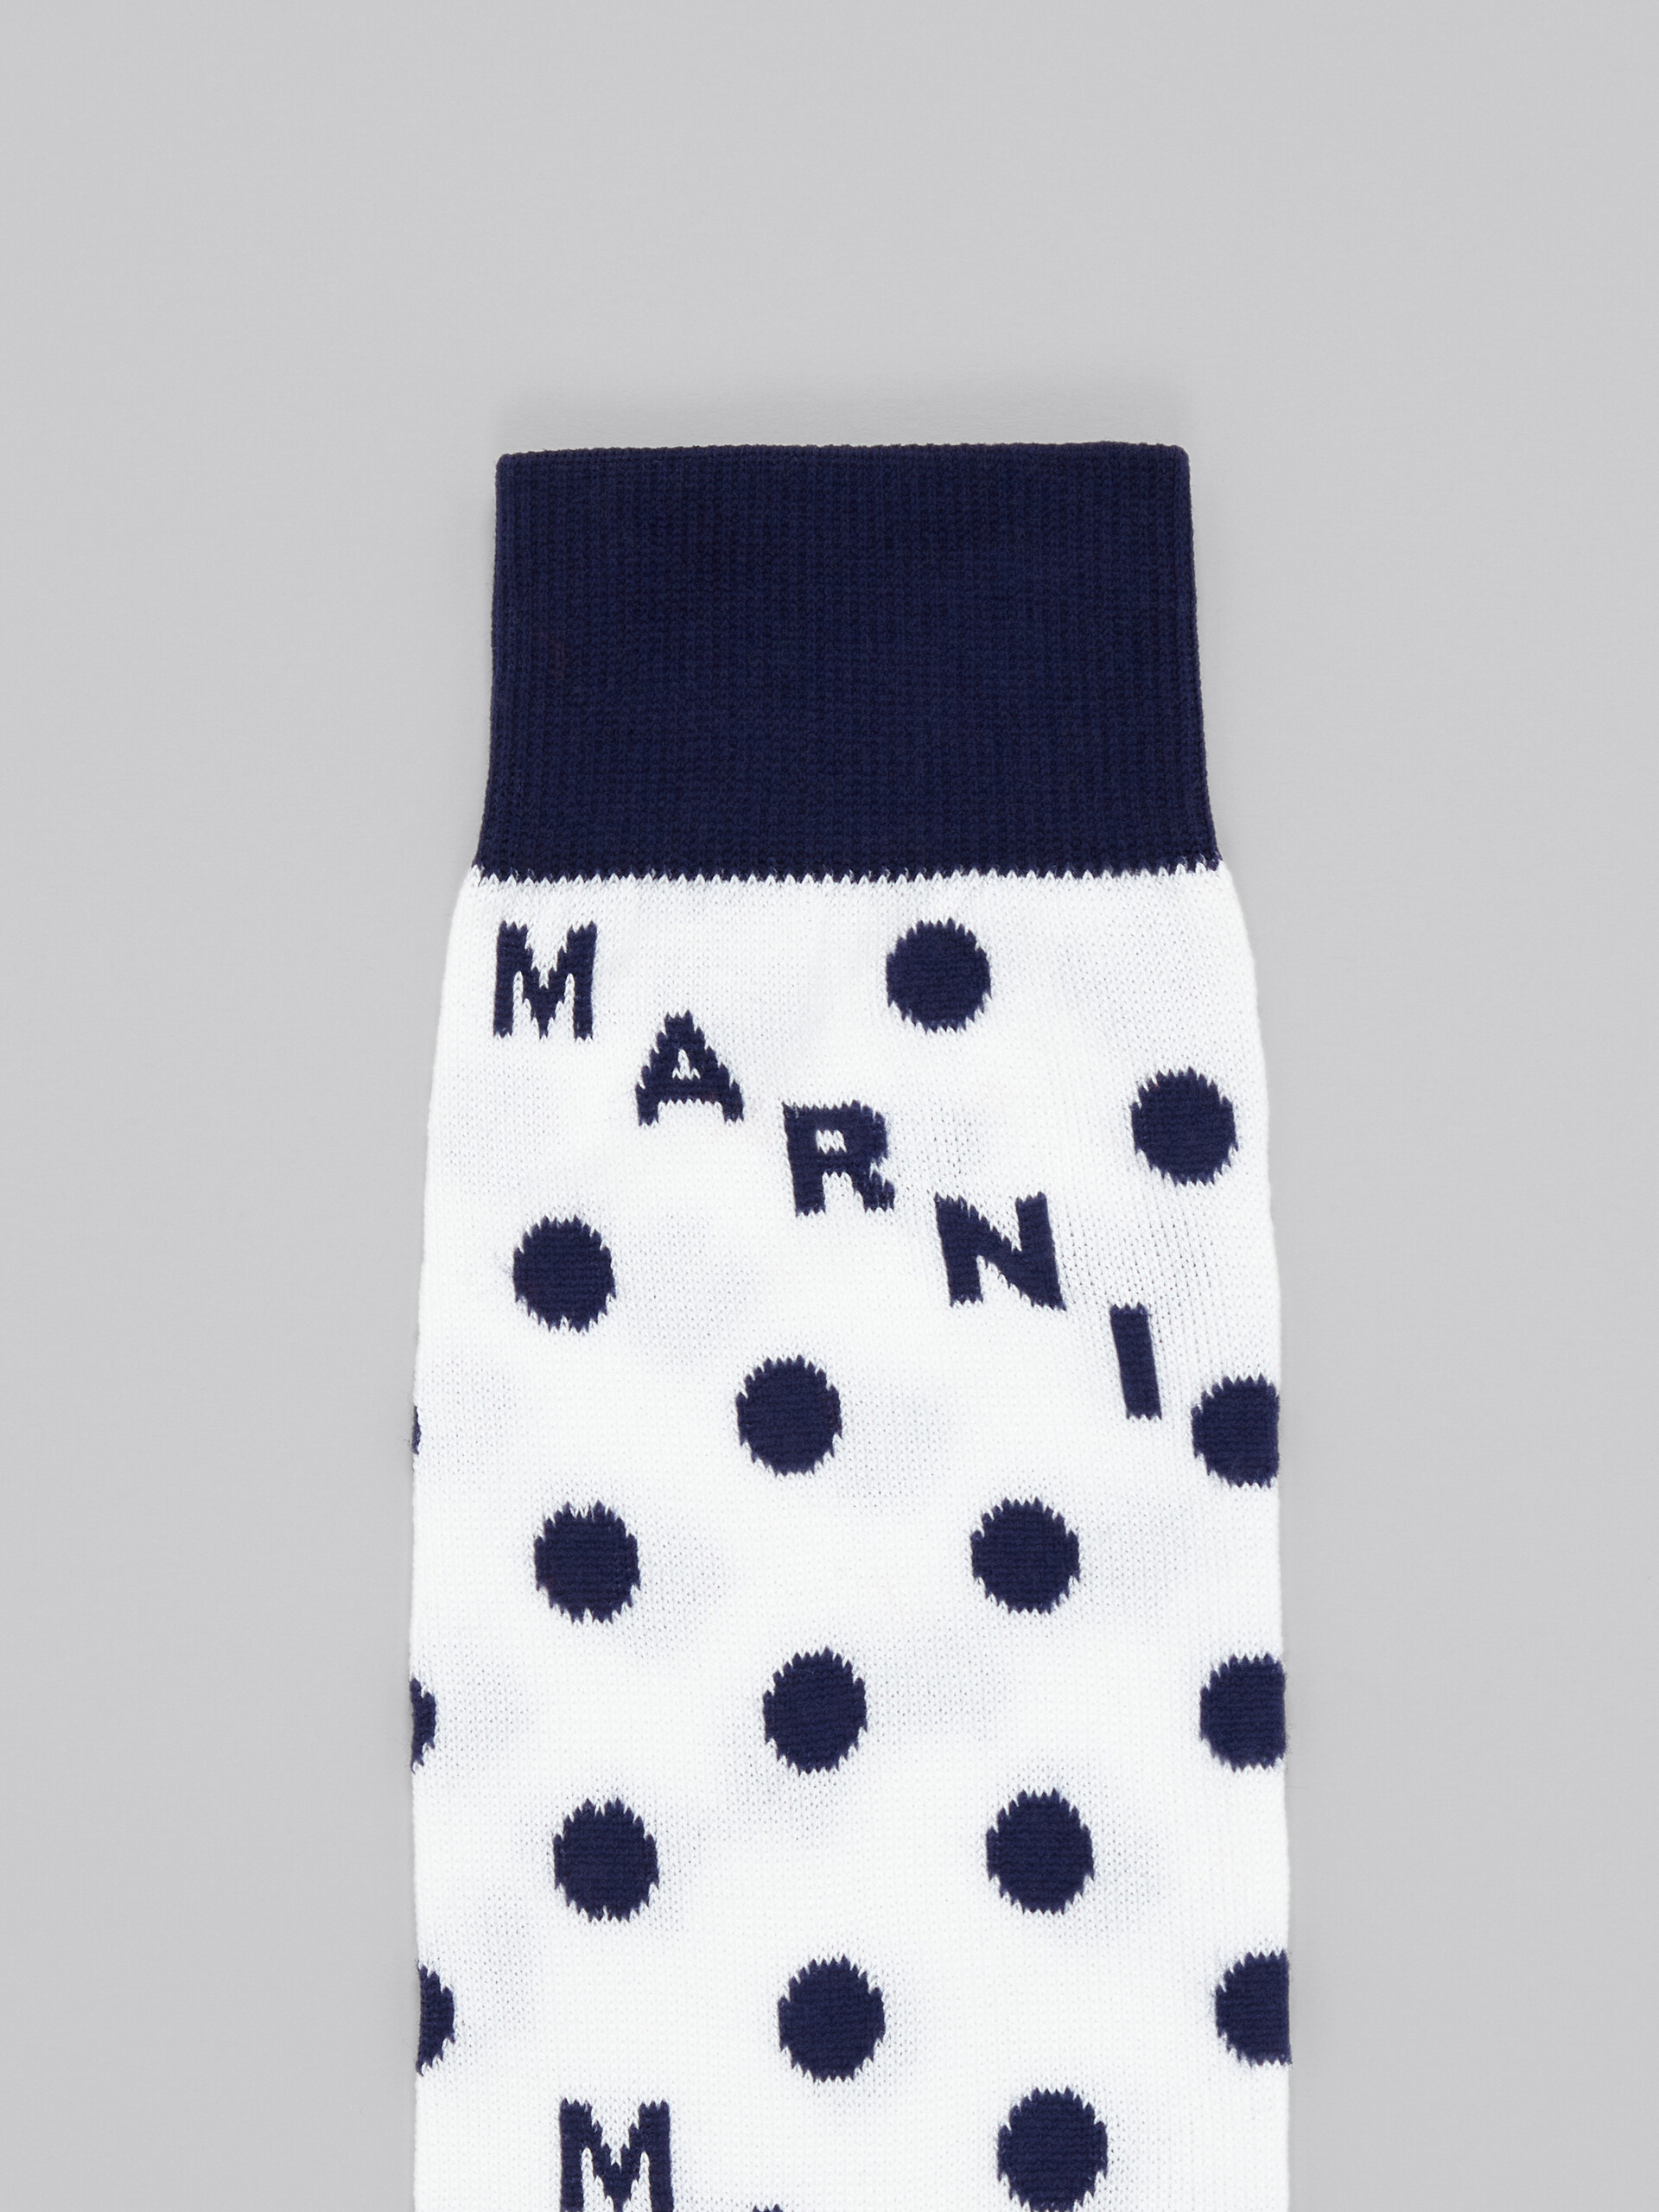 White cotton and nylon socks with polka dots - Socks - Image 3